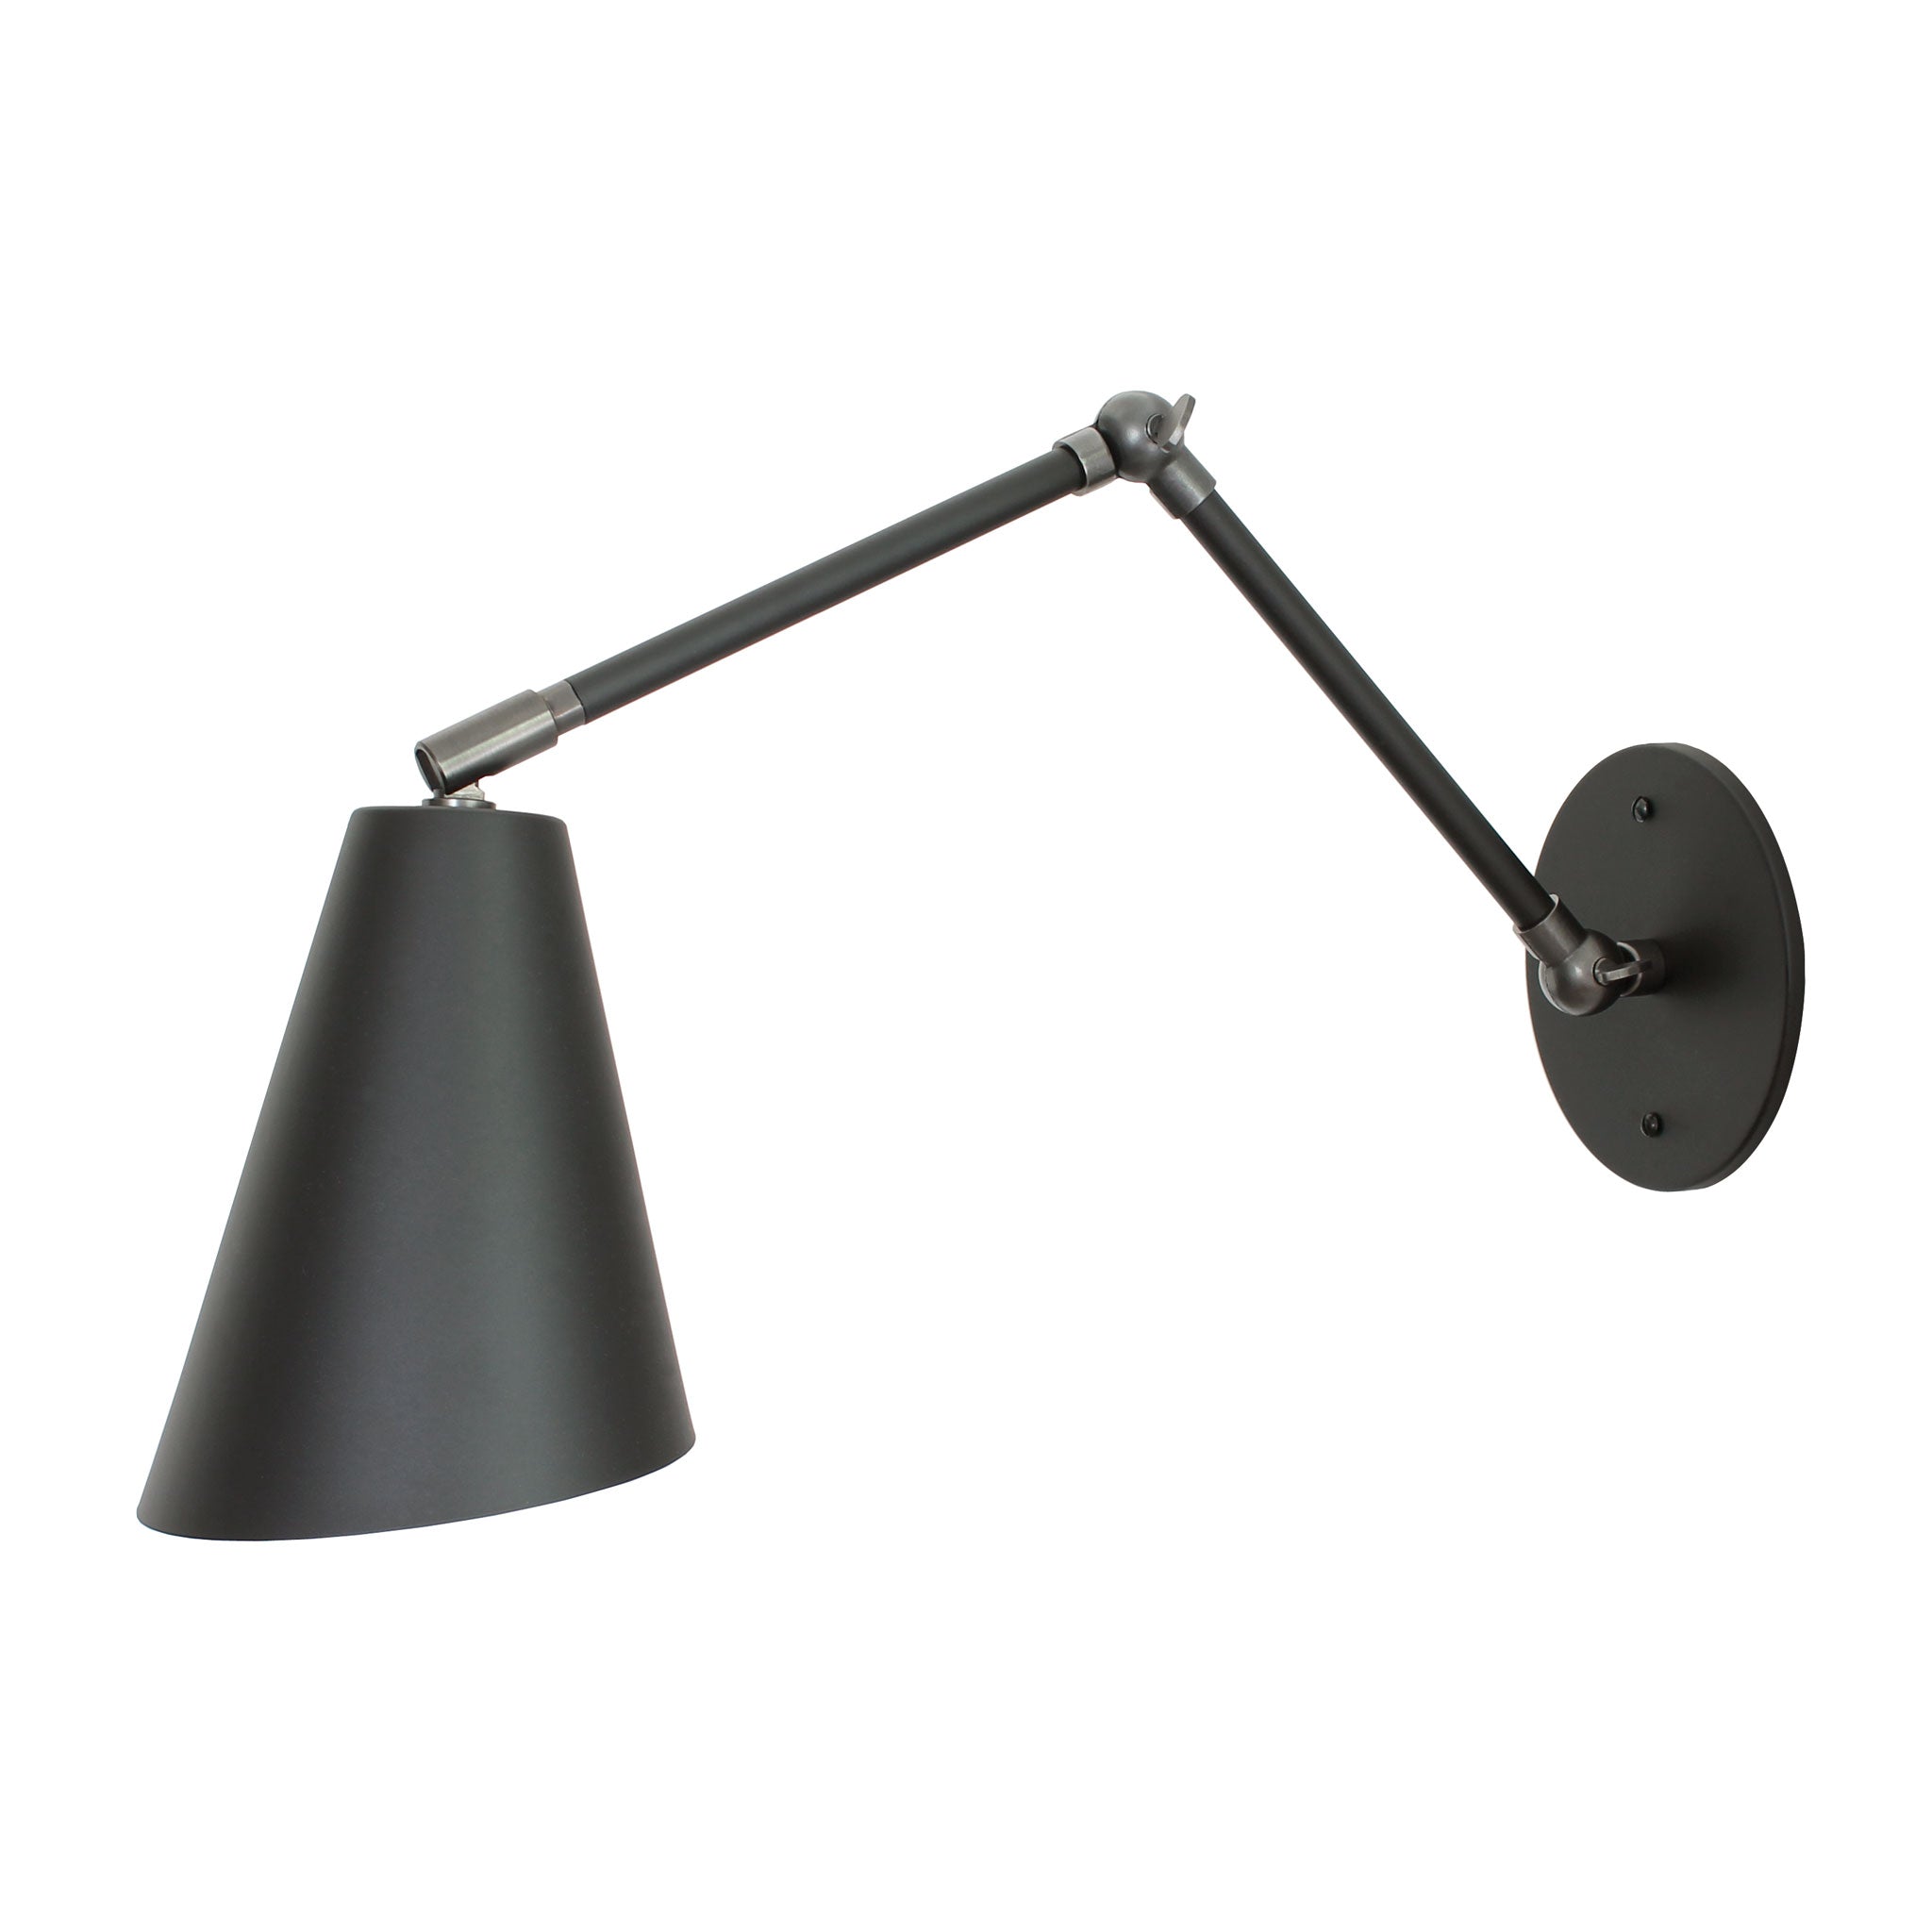 Geometric acoustic lamp Hillock 2.0